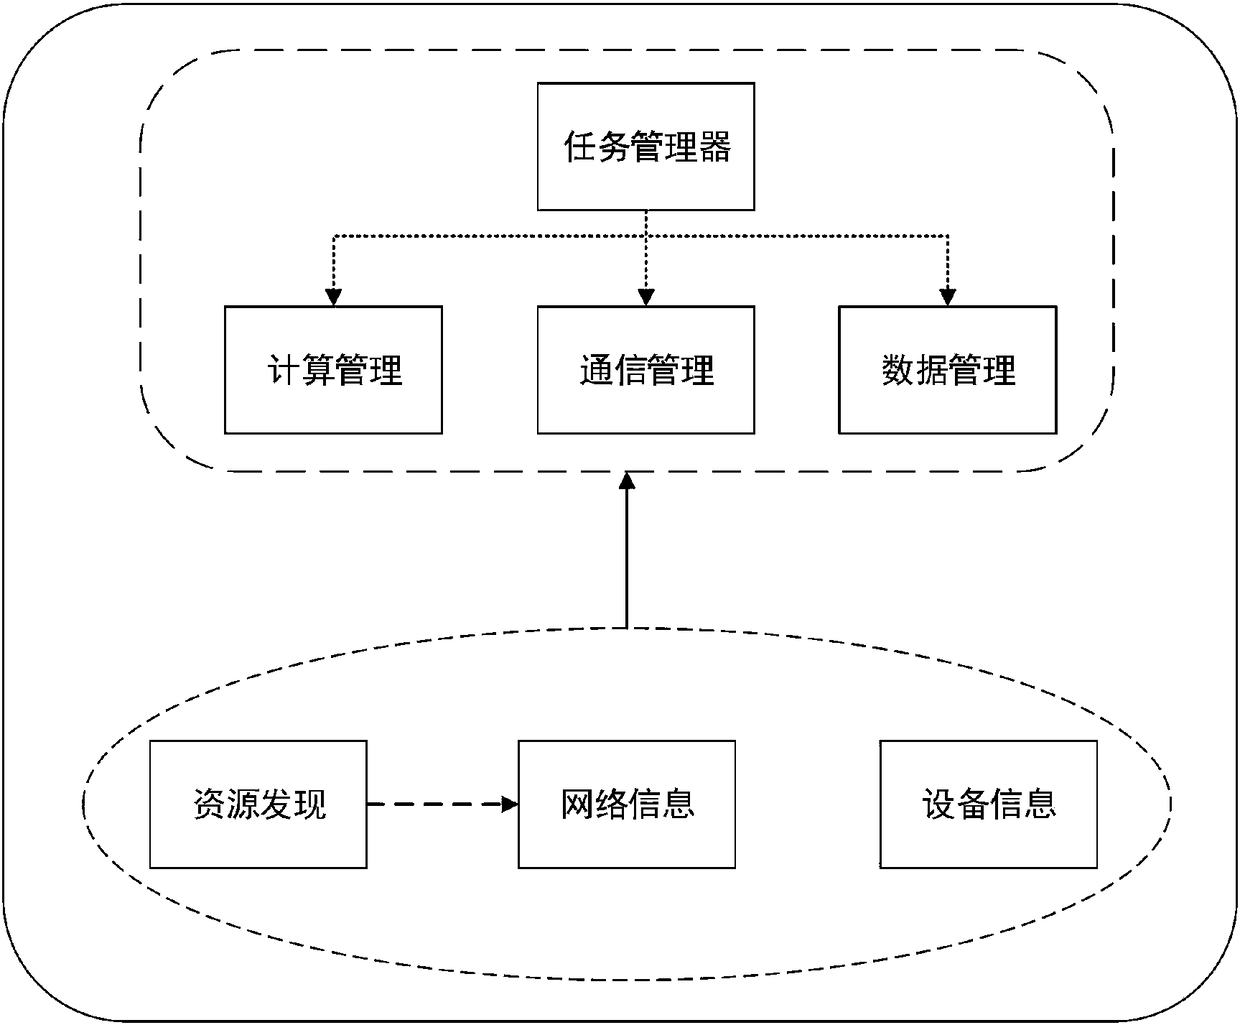 Task-driven multi-gateway cooperation method